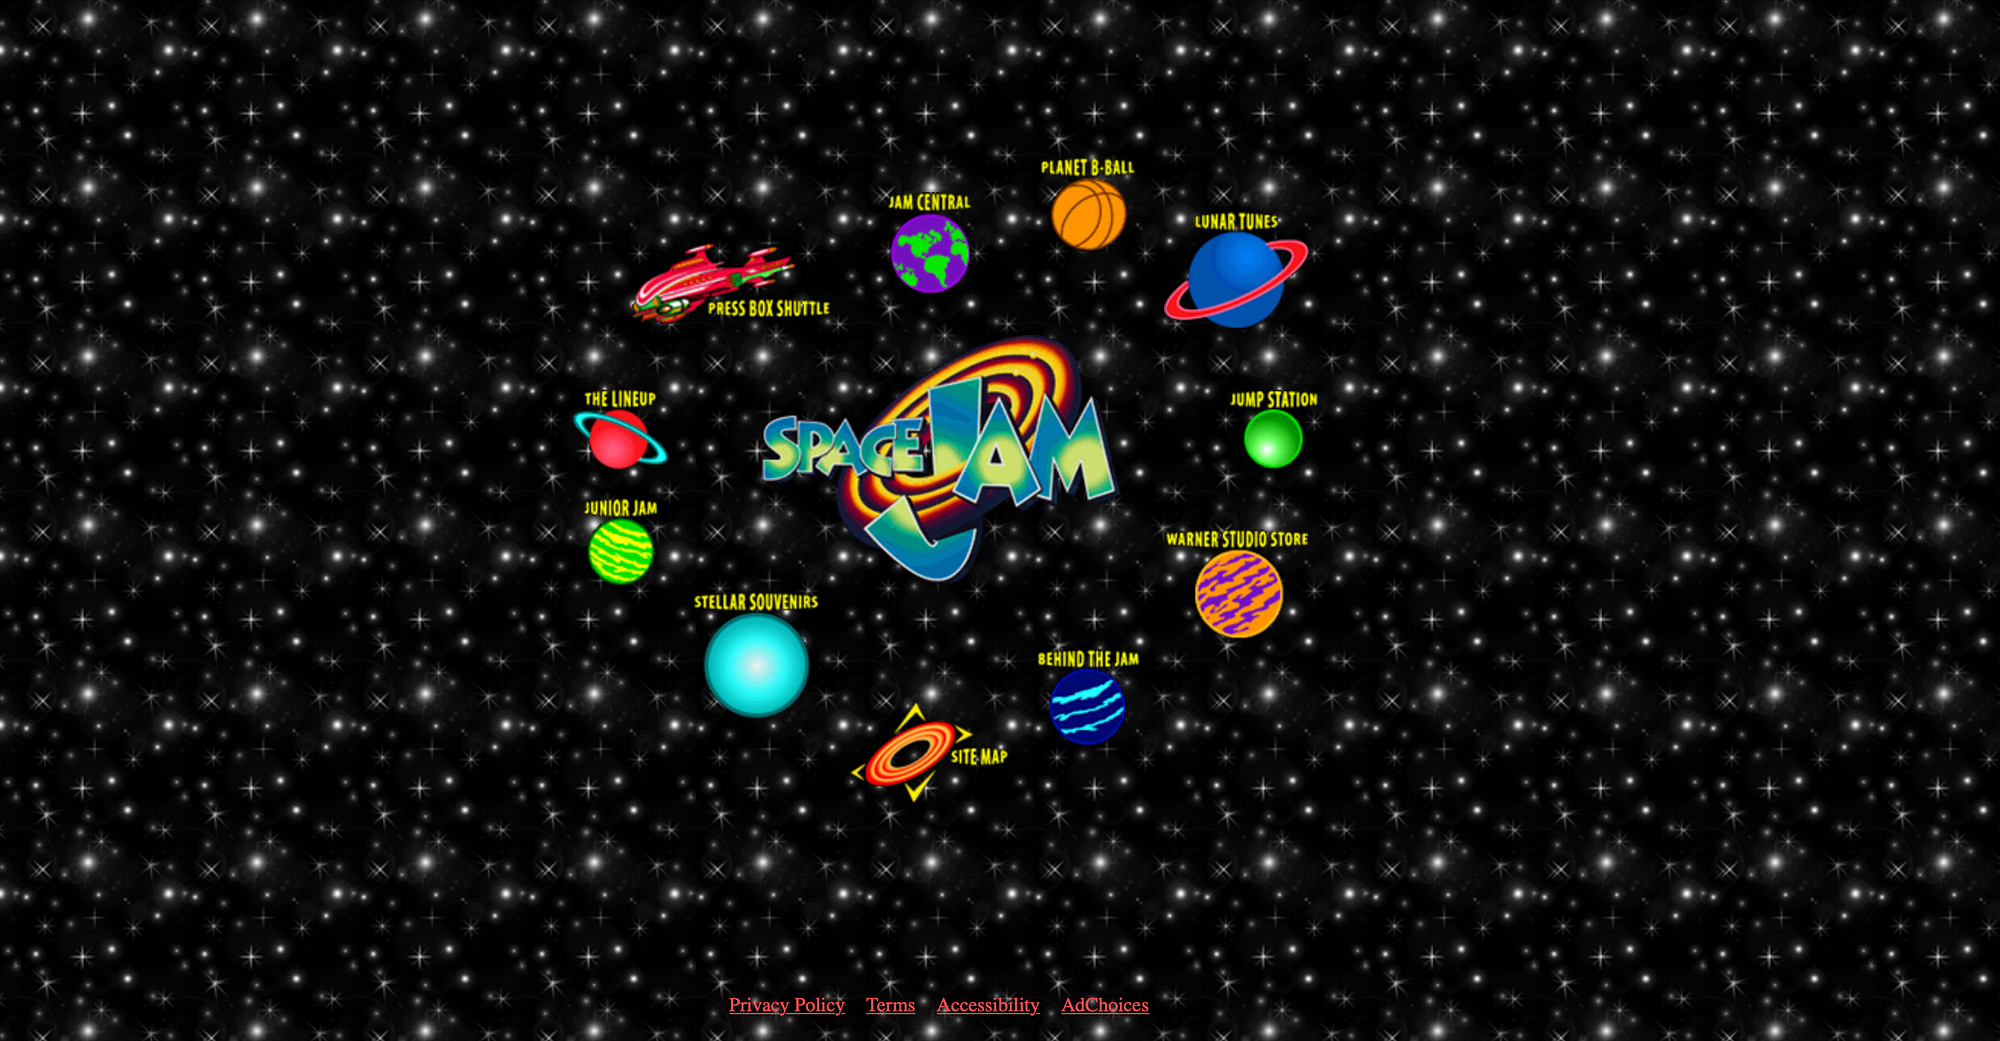 Space Jam example of 90s web design.